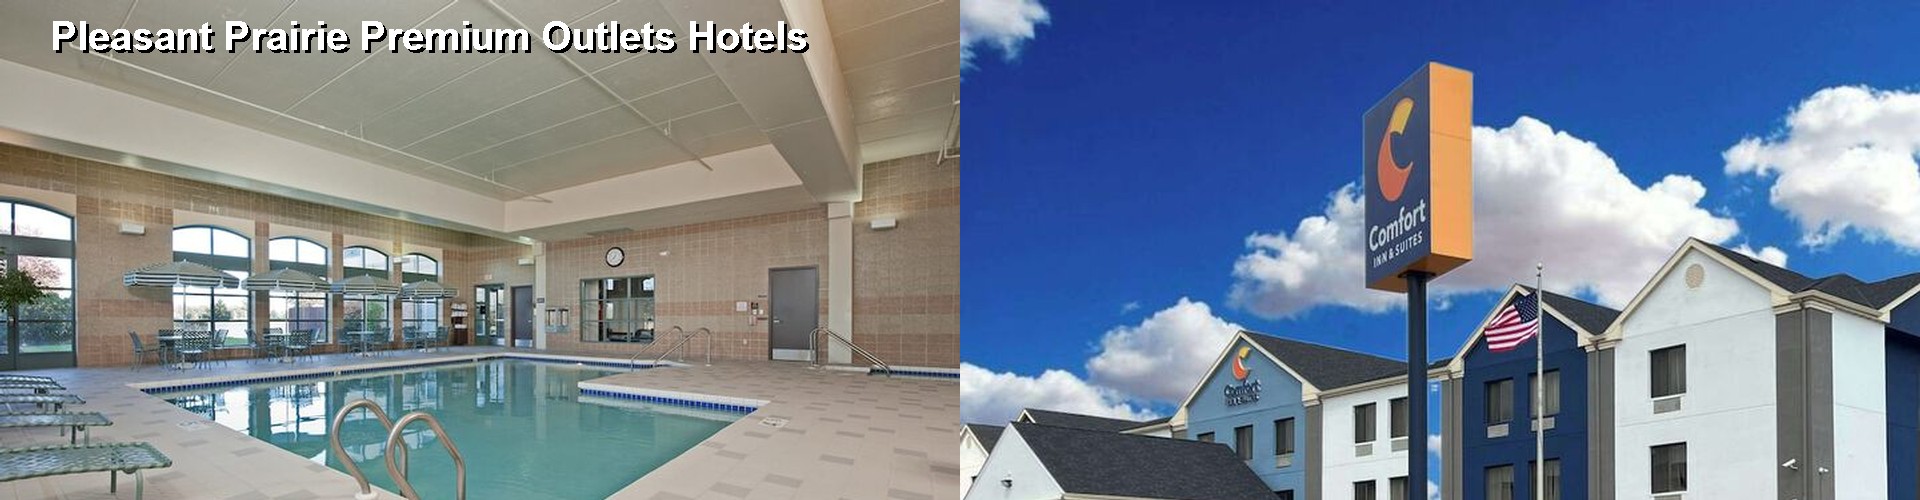 5 Best Hotels near Pleasant Prairie Premium Outlets